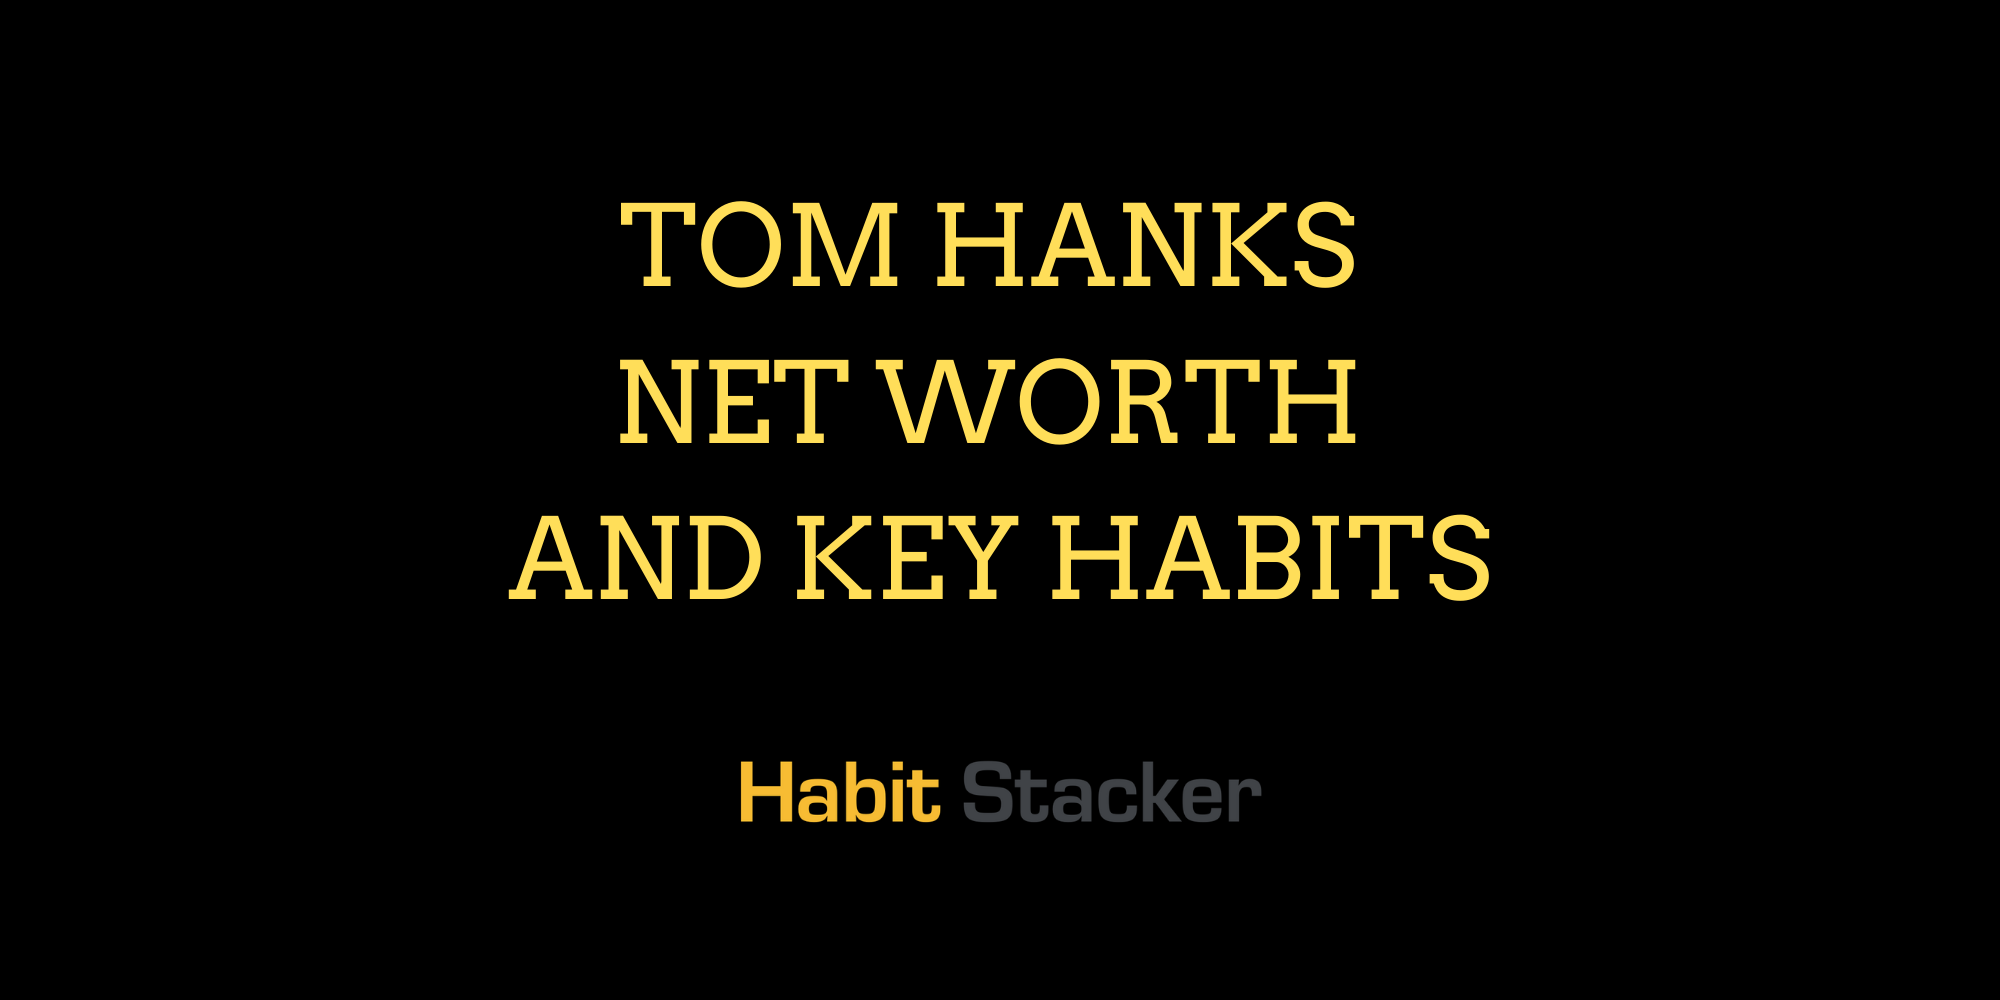 Tom Hanks Net Worth And Key Habits